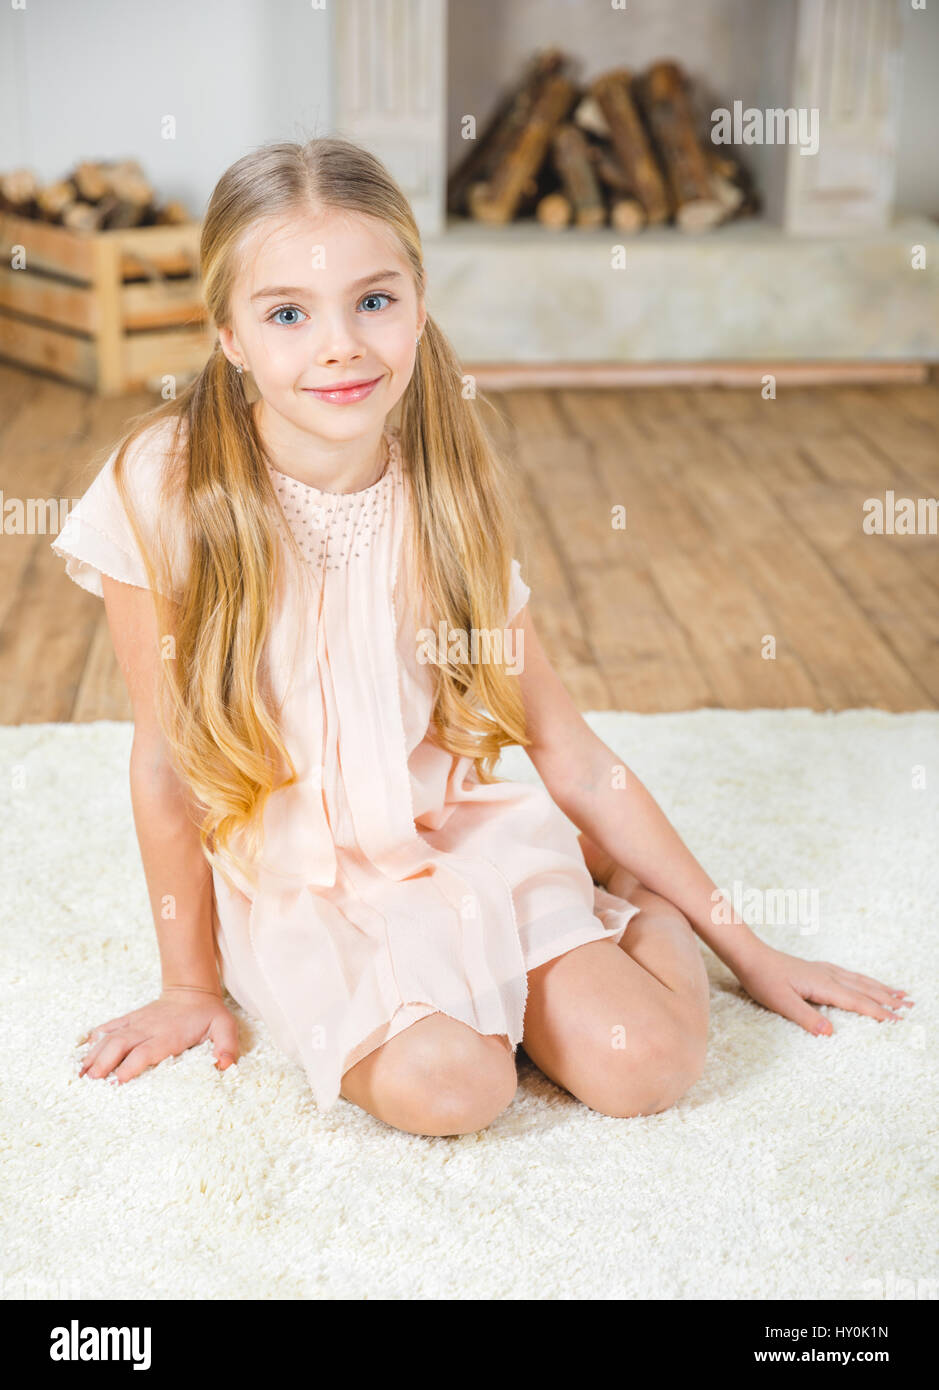 https://c8.alamy.com/comp/HY0K1N/cute-little-girl-sitting-on-white-carpet-and-smiling-at-camera-HY0K1N.jpg